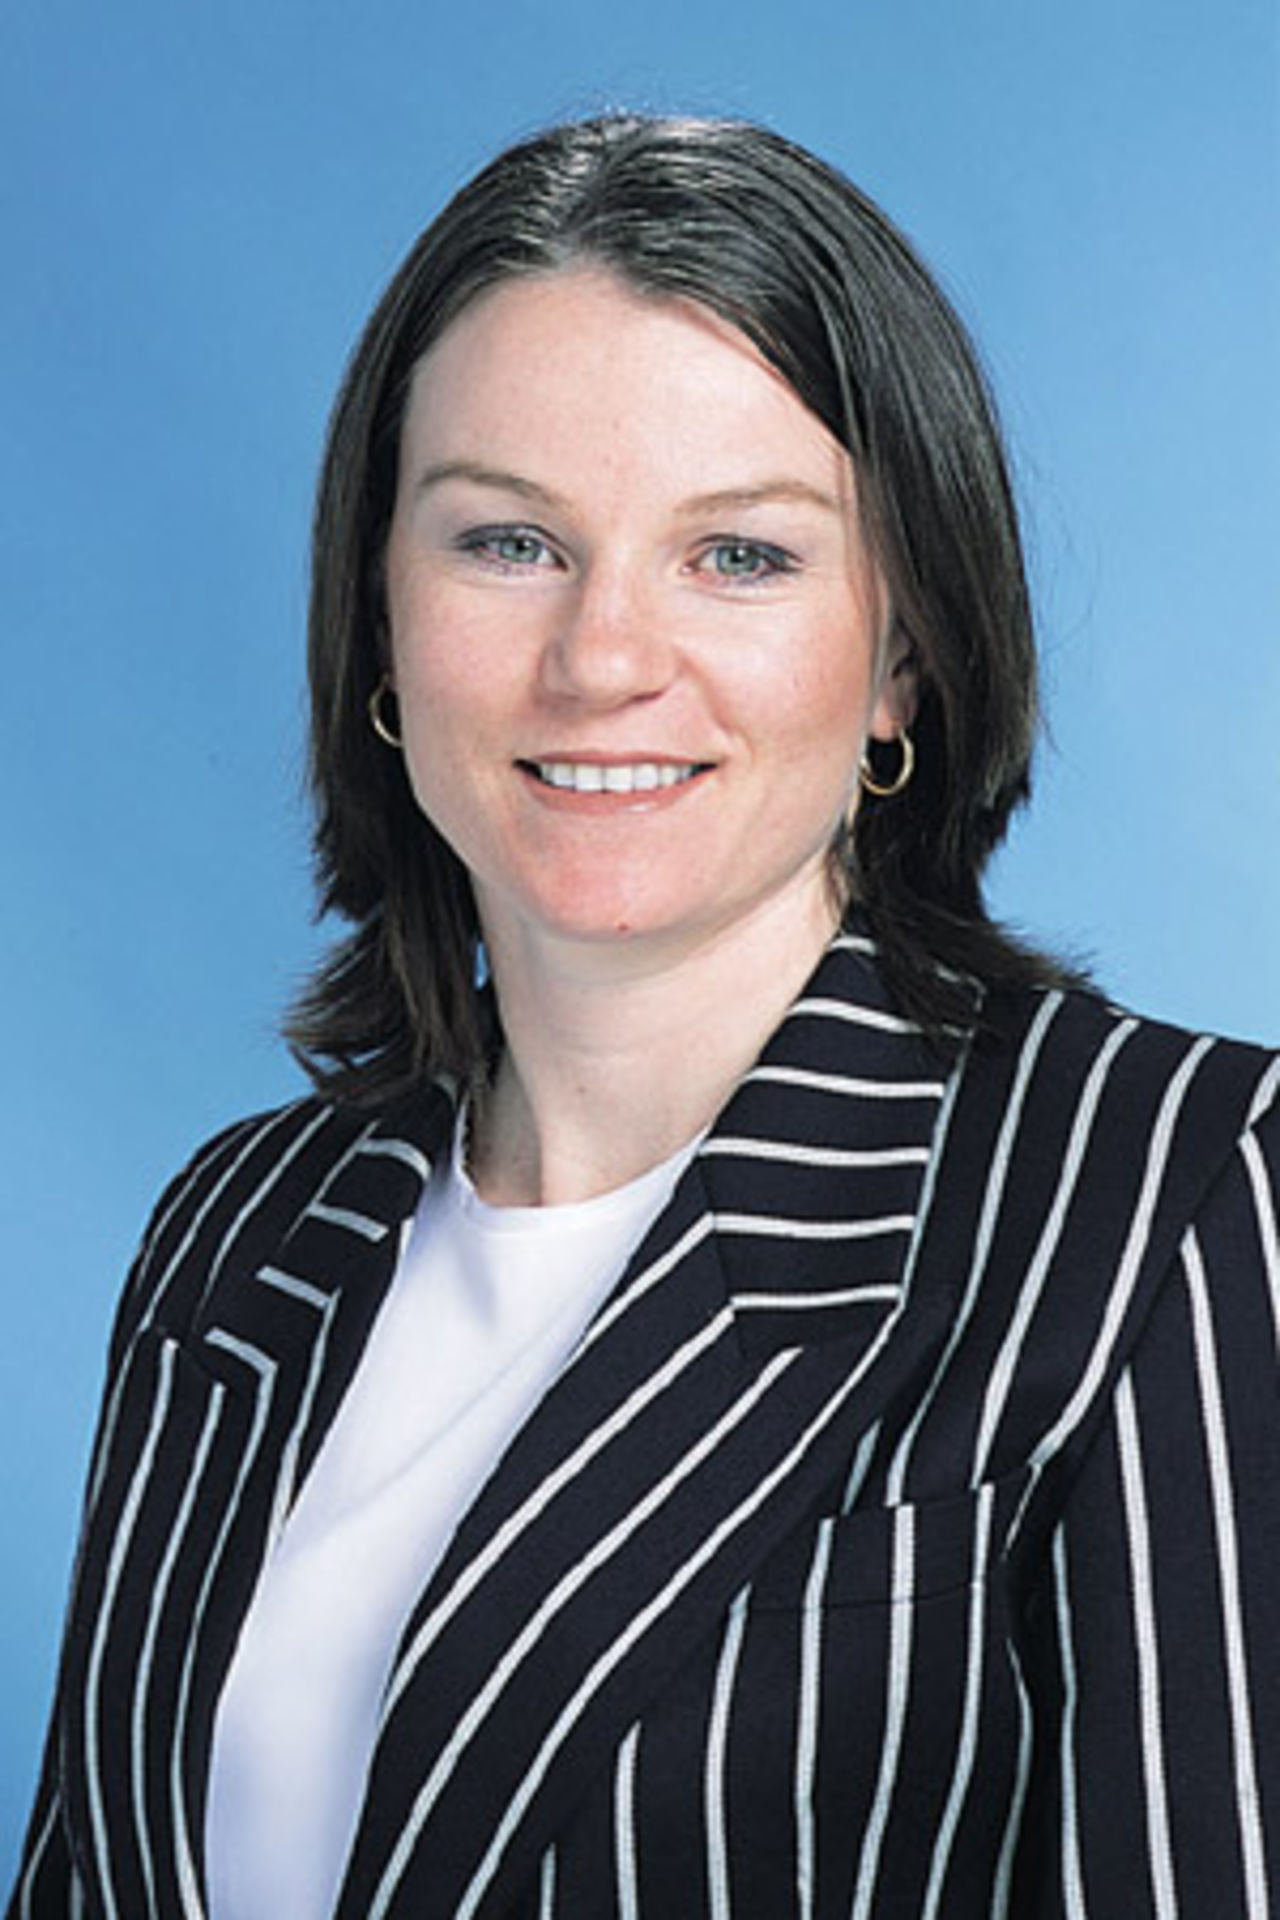 Portrait of Emily Drumm - New Zealand women's captain in the 2001/02 season.